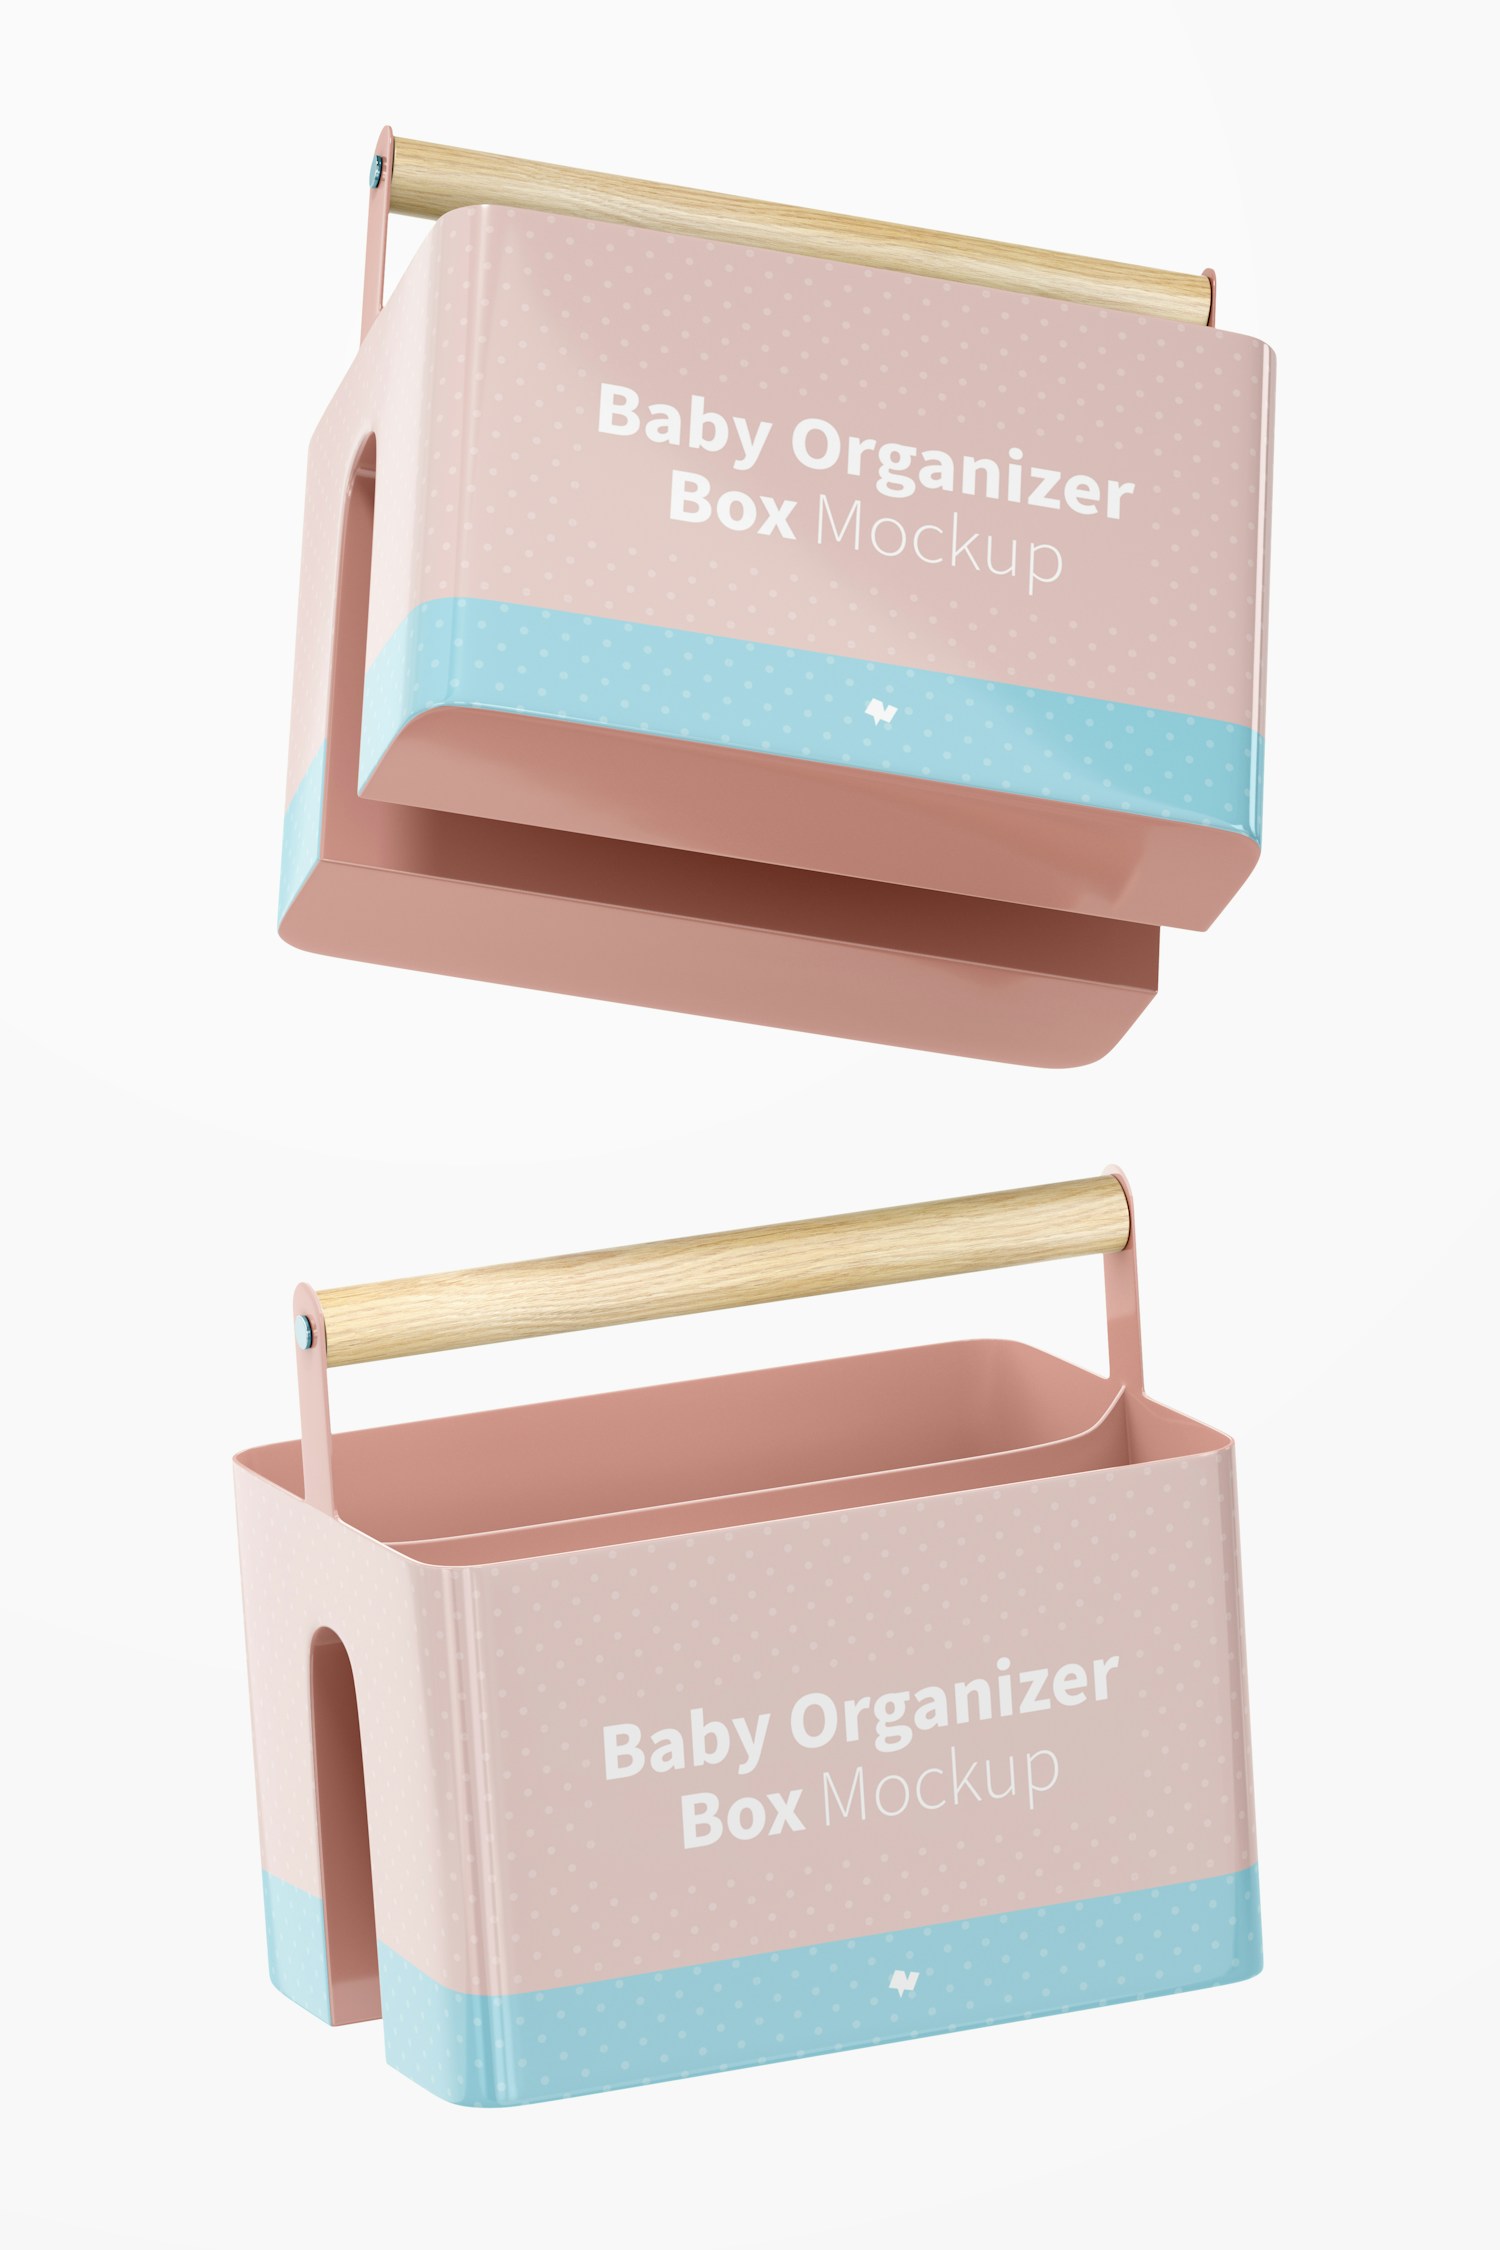 Baby Organizer Box Mockup, Floating